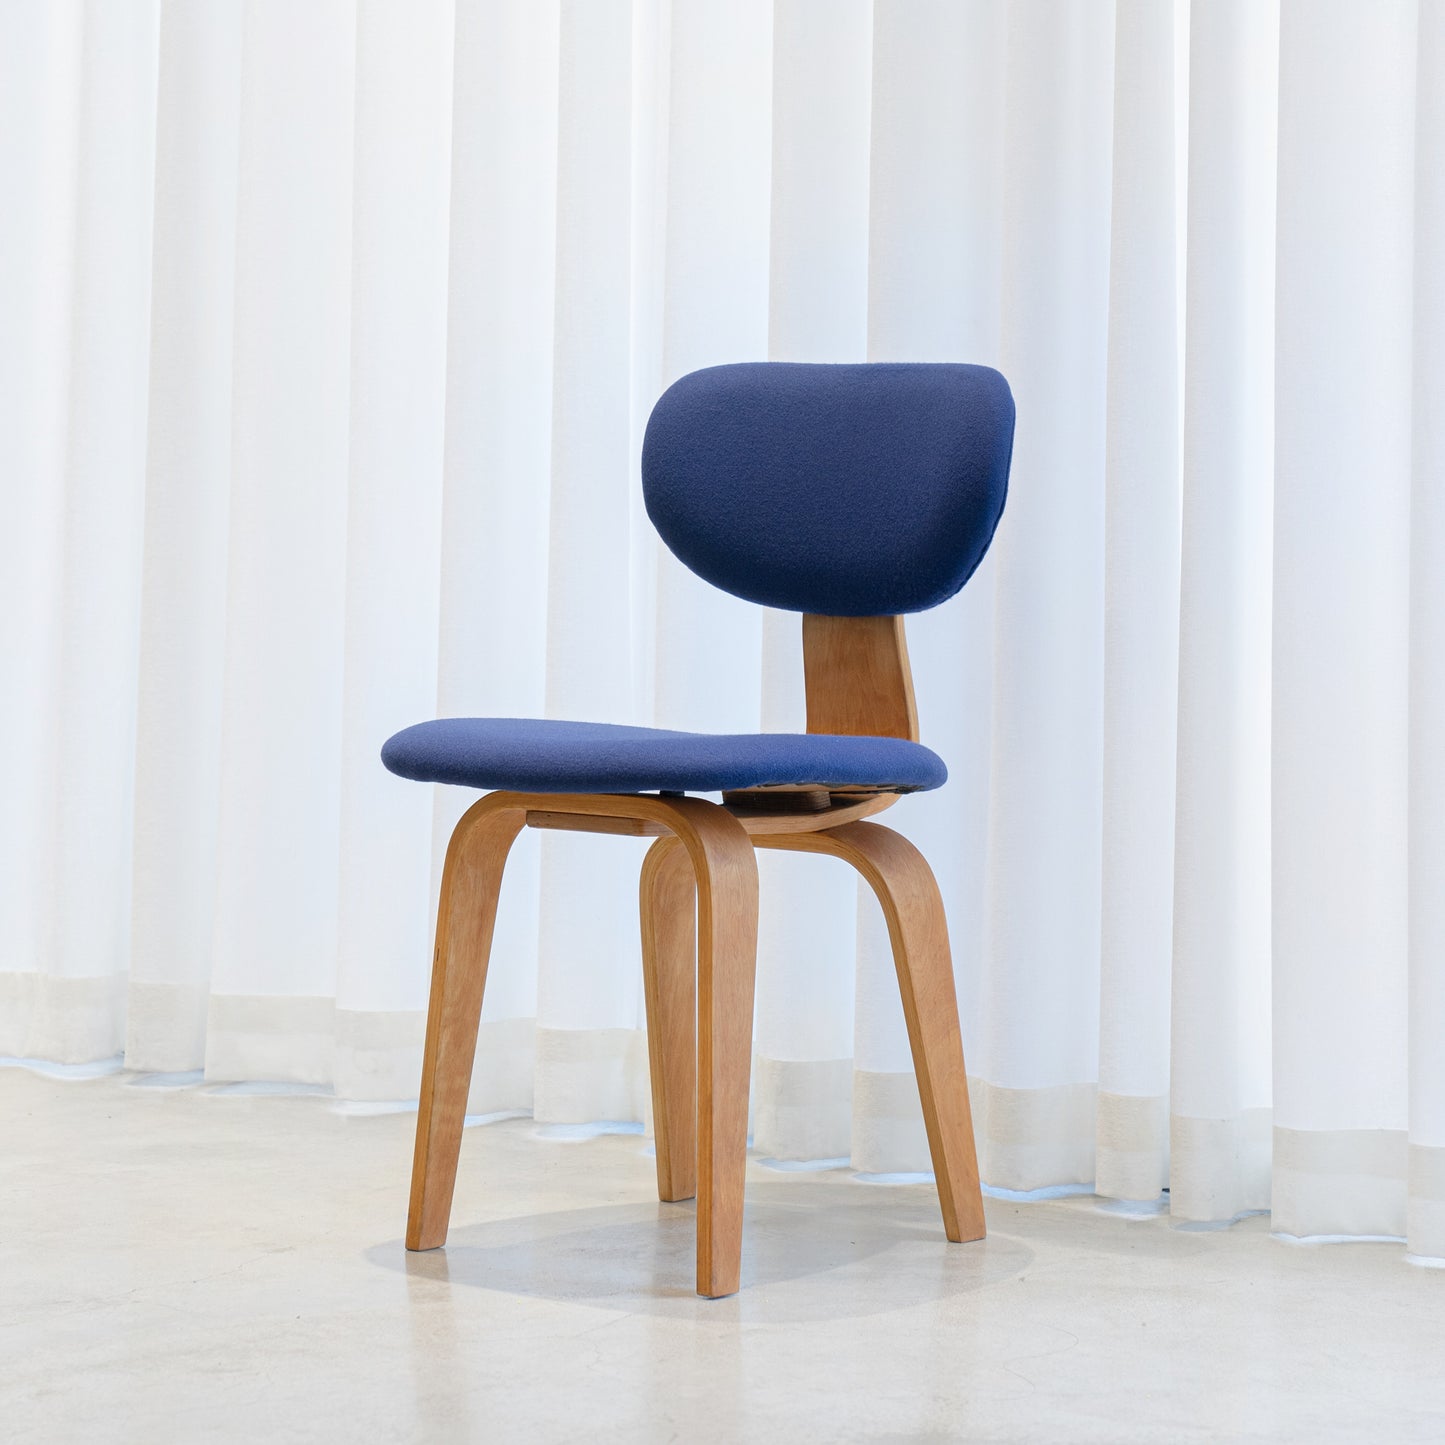 [LOT04] SB02 Chair by Cees Braakman